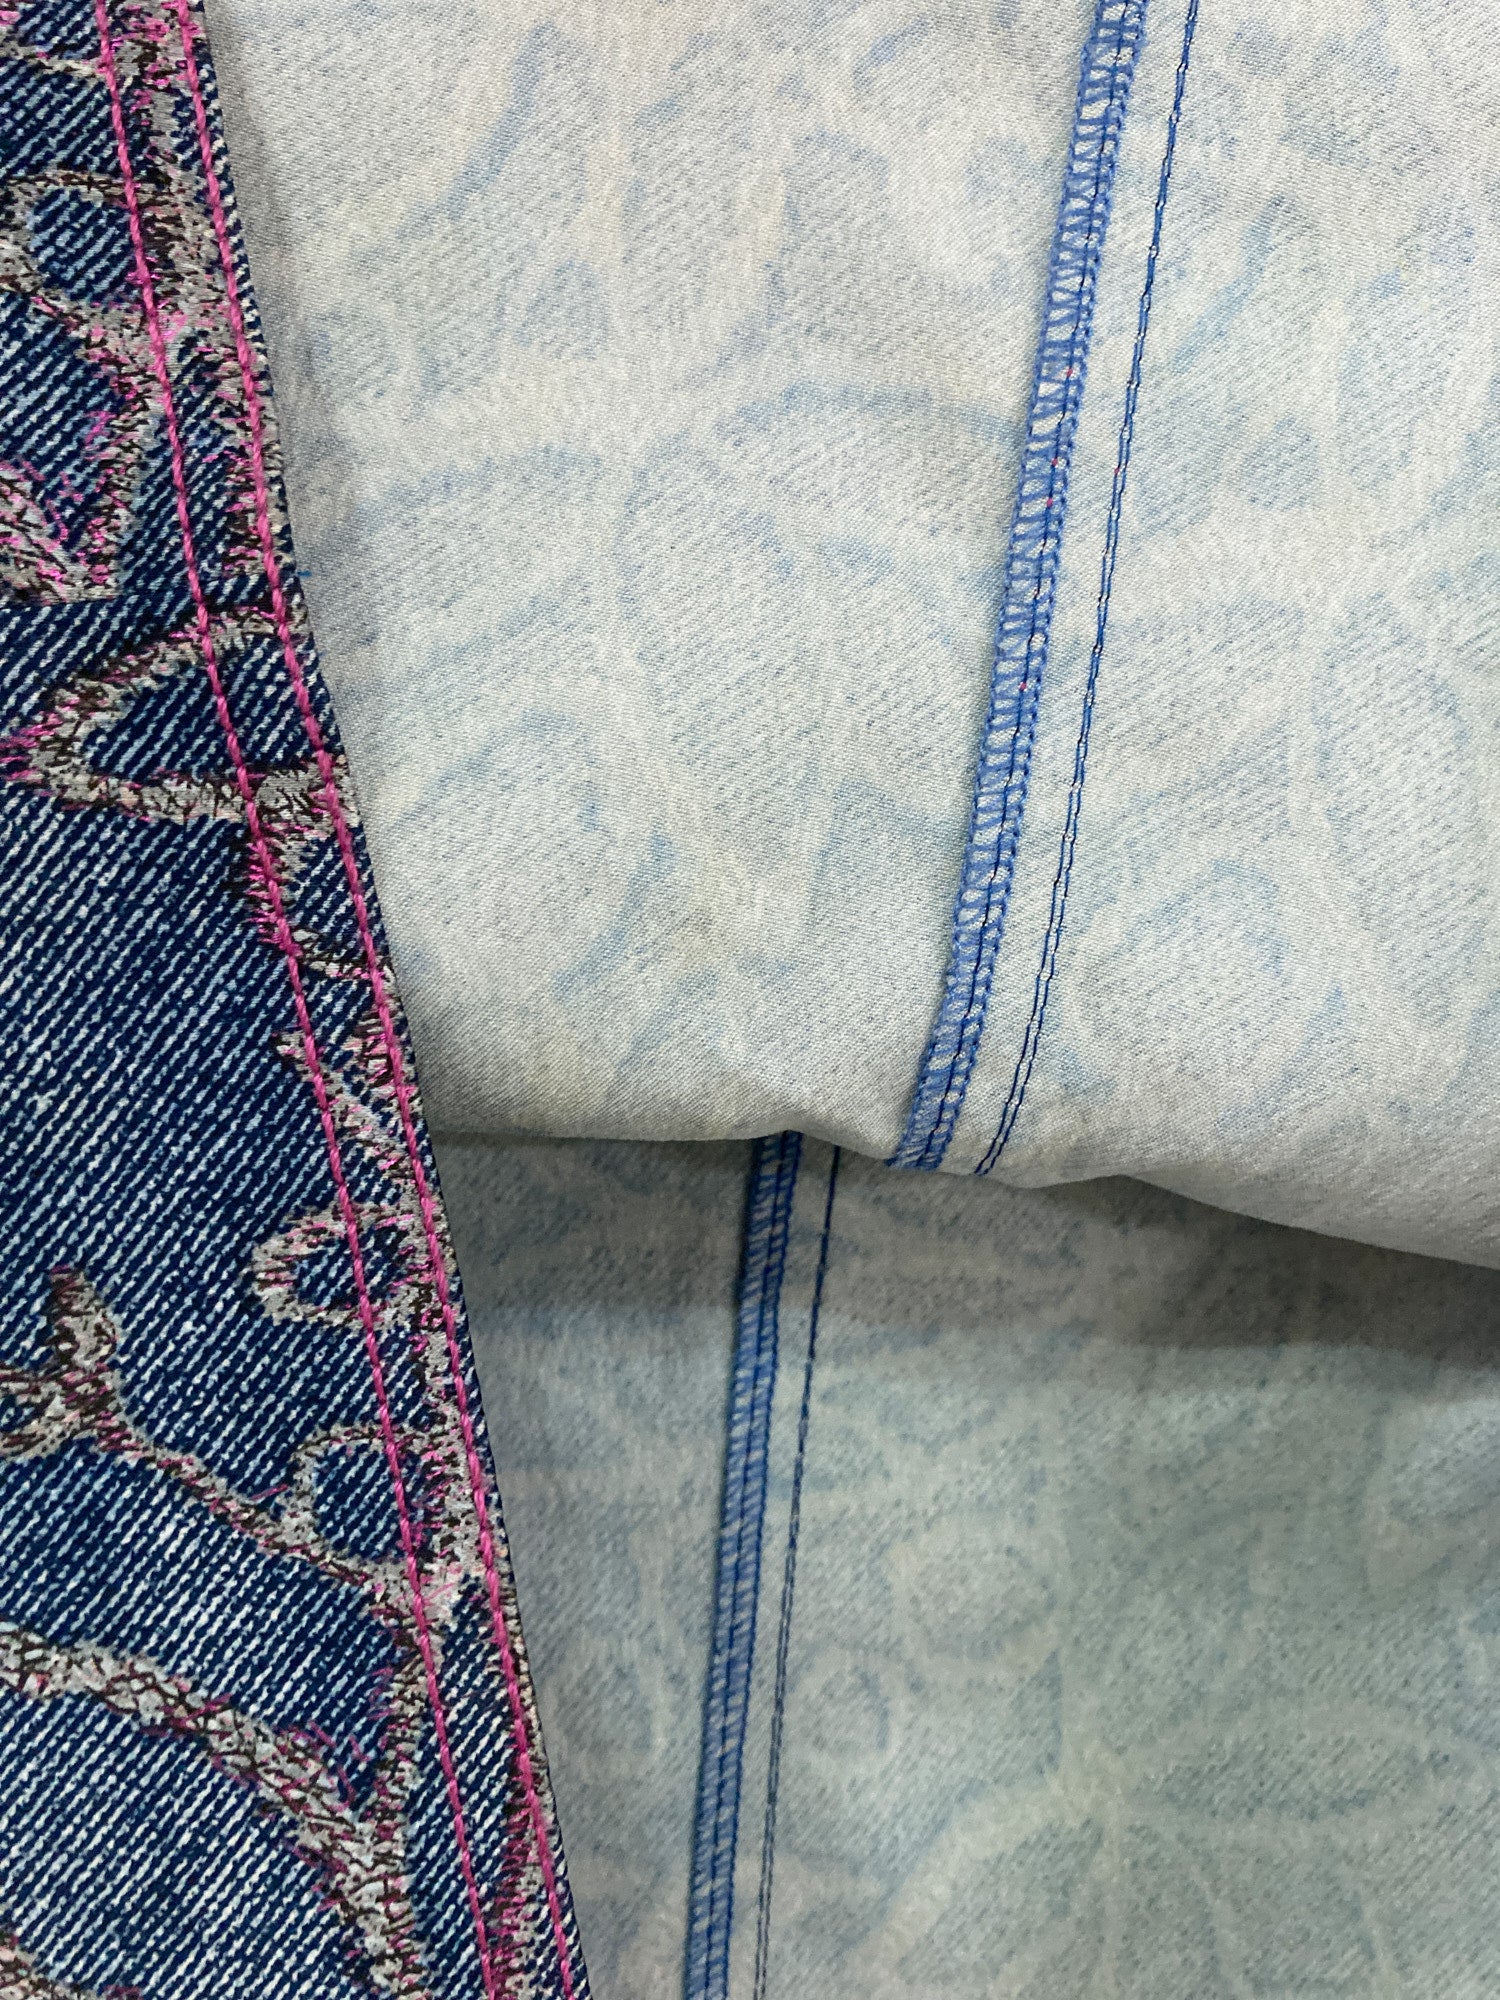 Julien Macdonald blue and pink floral embroidered denim print skirt - size 38